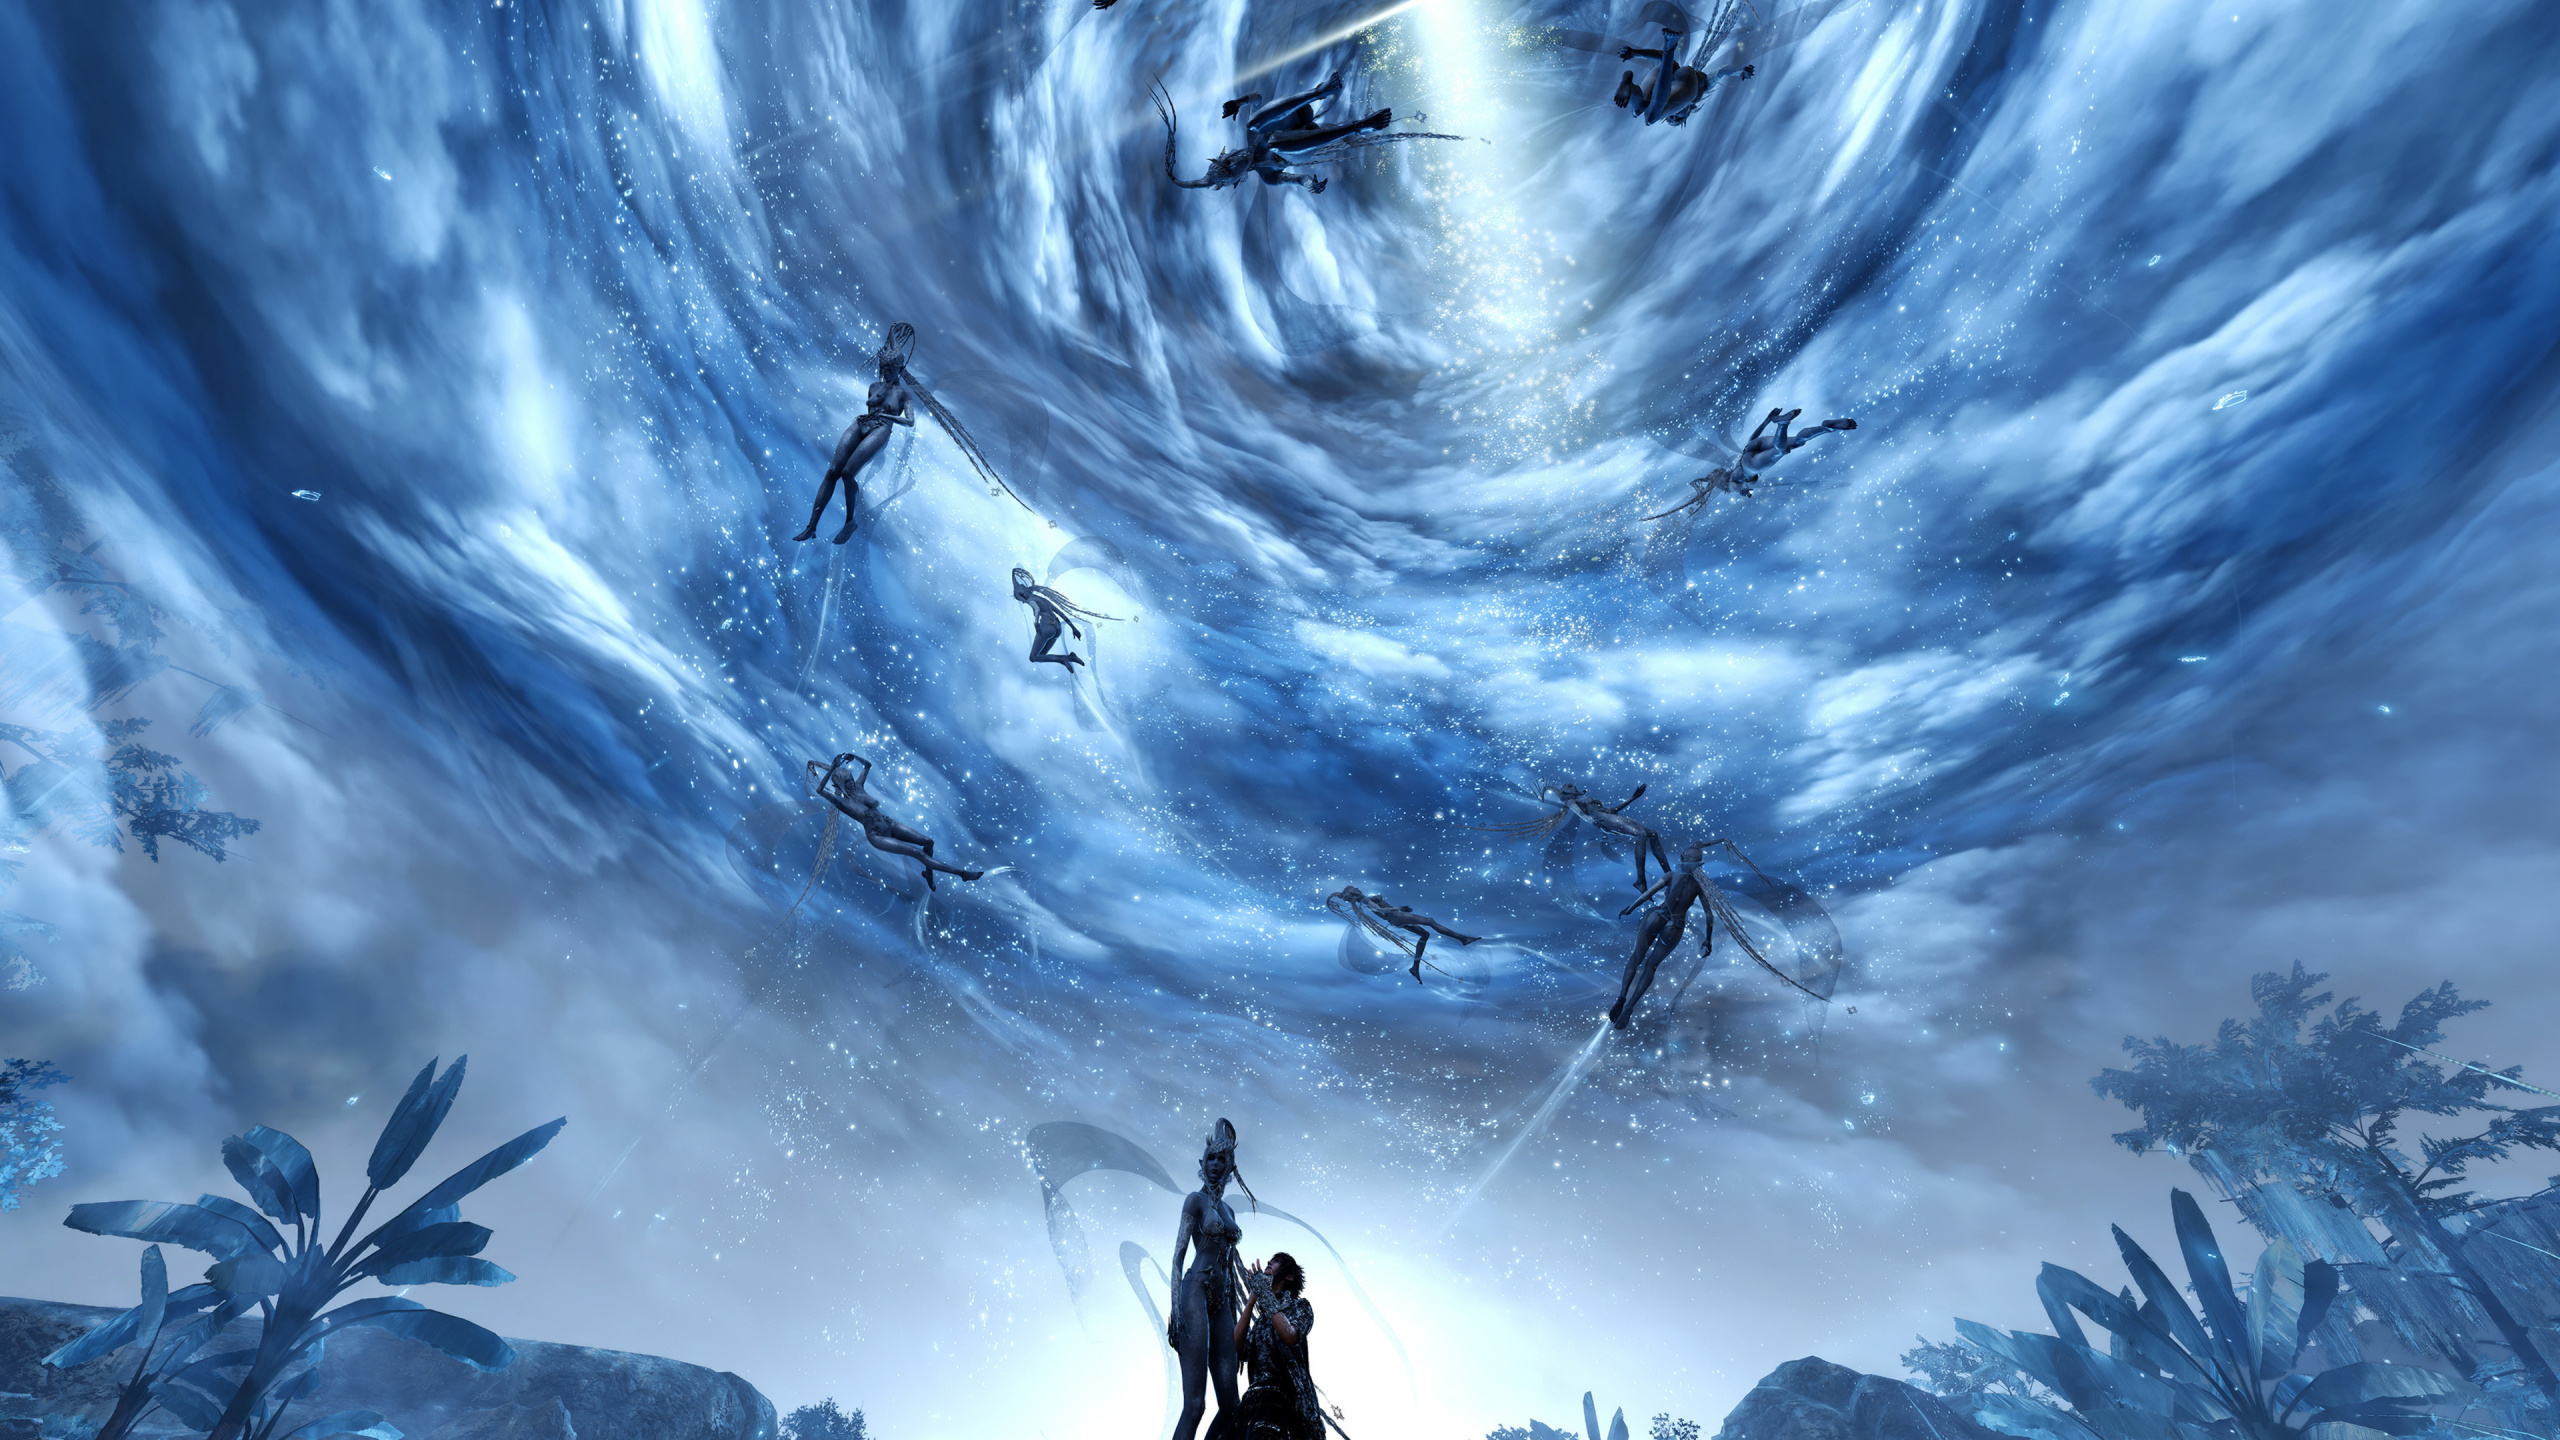 Final Fantasy Xv, Final Fantasy VII Remake, Illustration, Espace, la Mythologie. Wallpaper in 2560x1440 Resolution